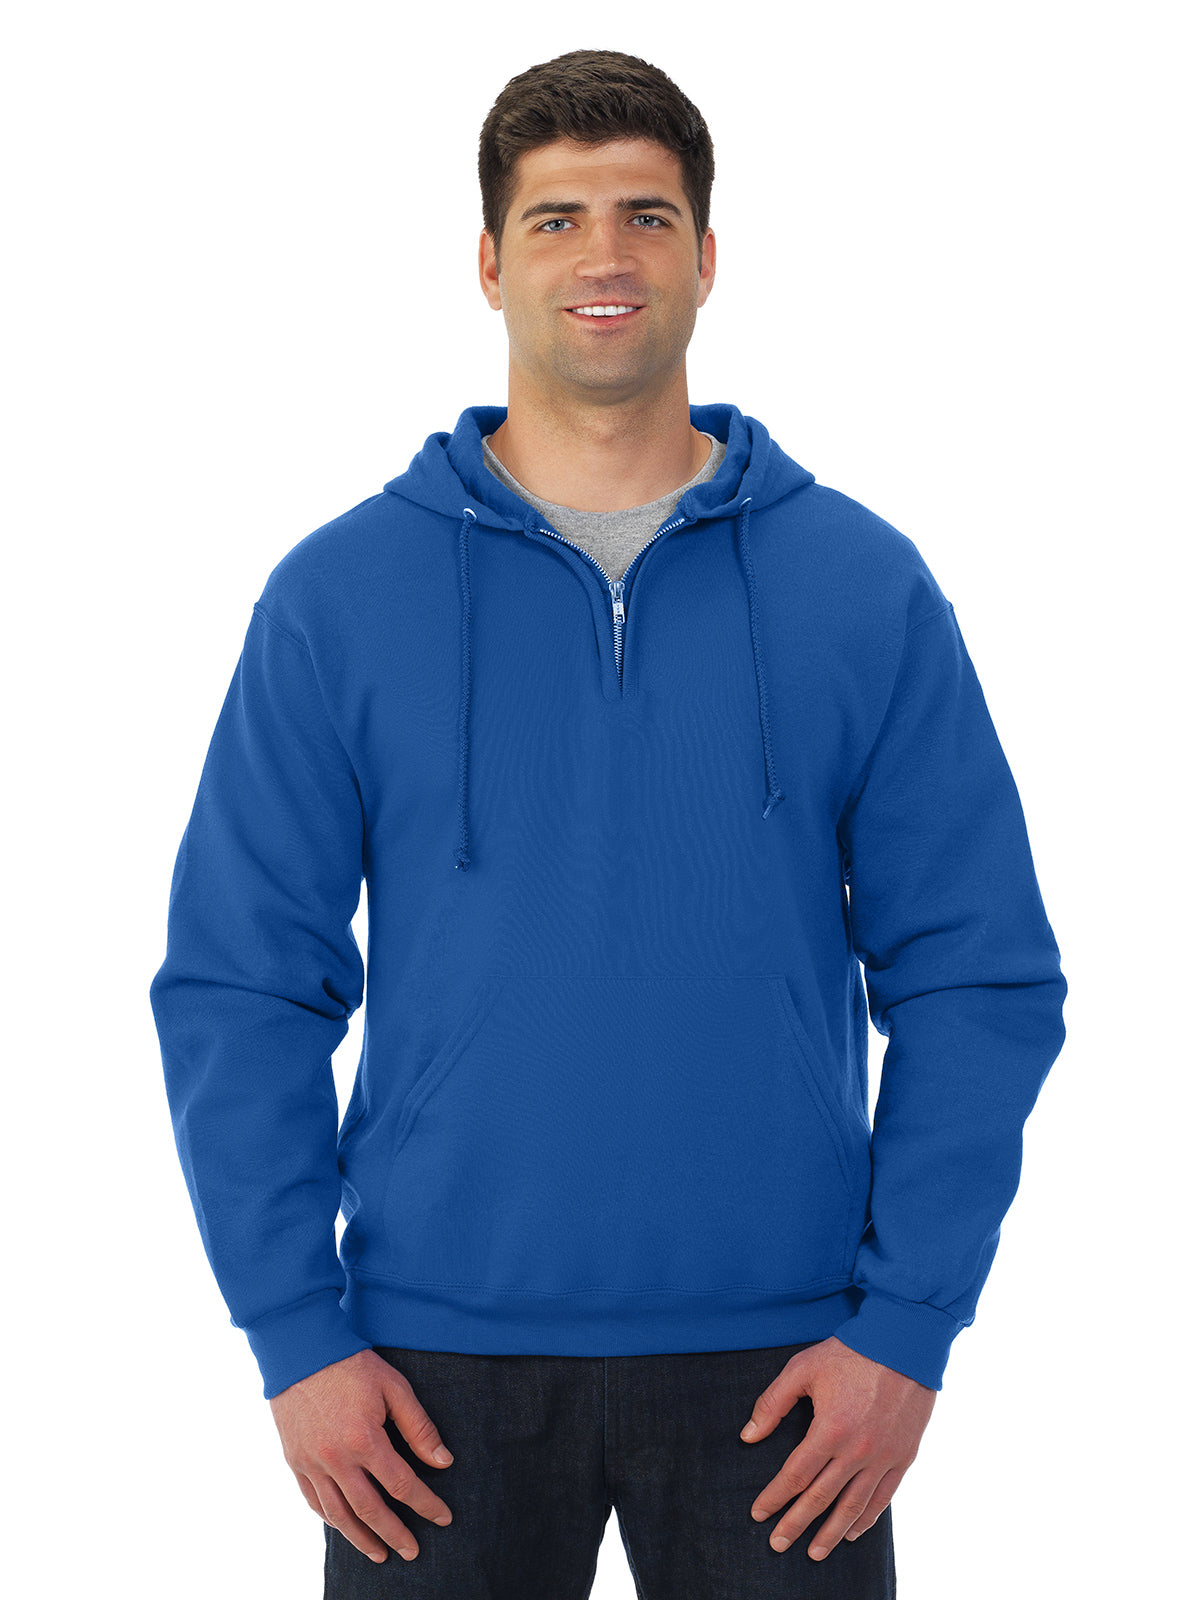 JZ994MR - Jerzees Adult NuBlend Quarter Zip Hooded Sweatshirt